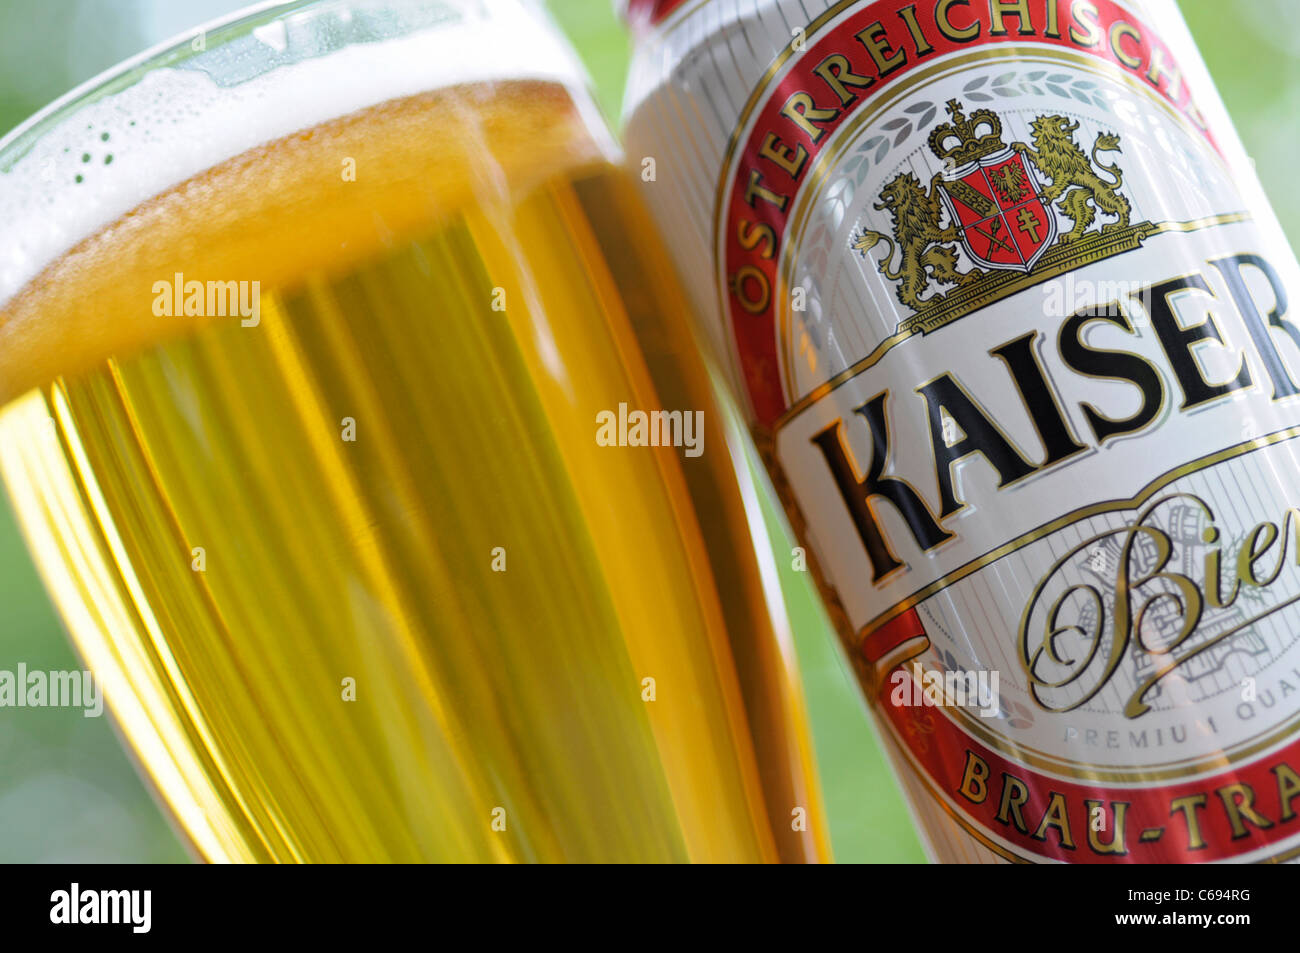 Vaso de cerveza y cerveza austriaca Kaiser Foto de stock